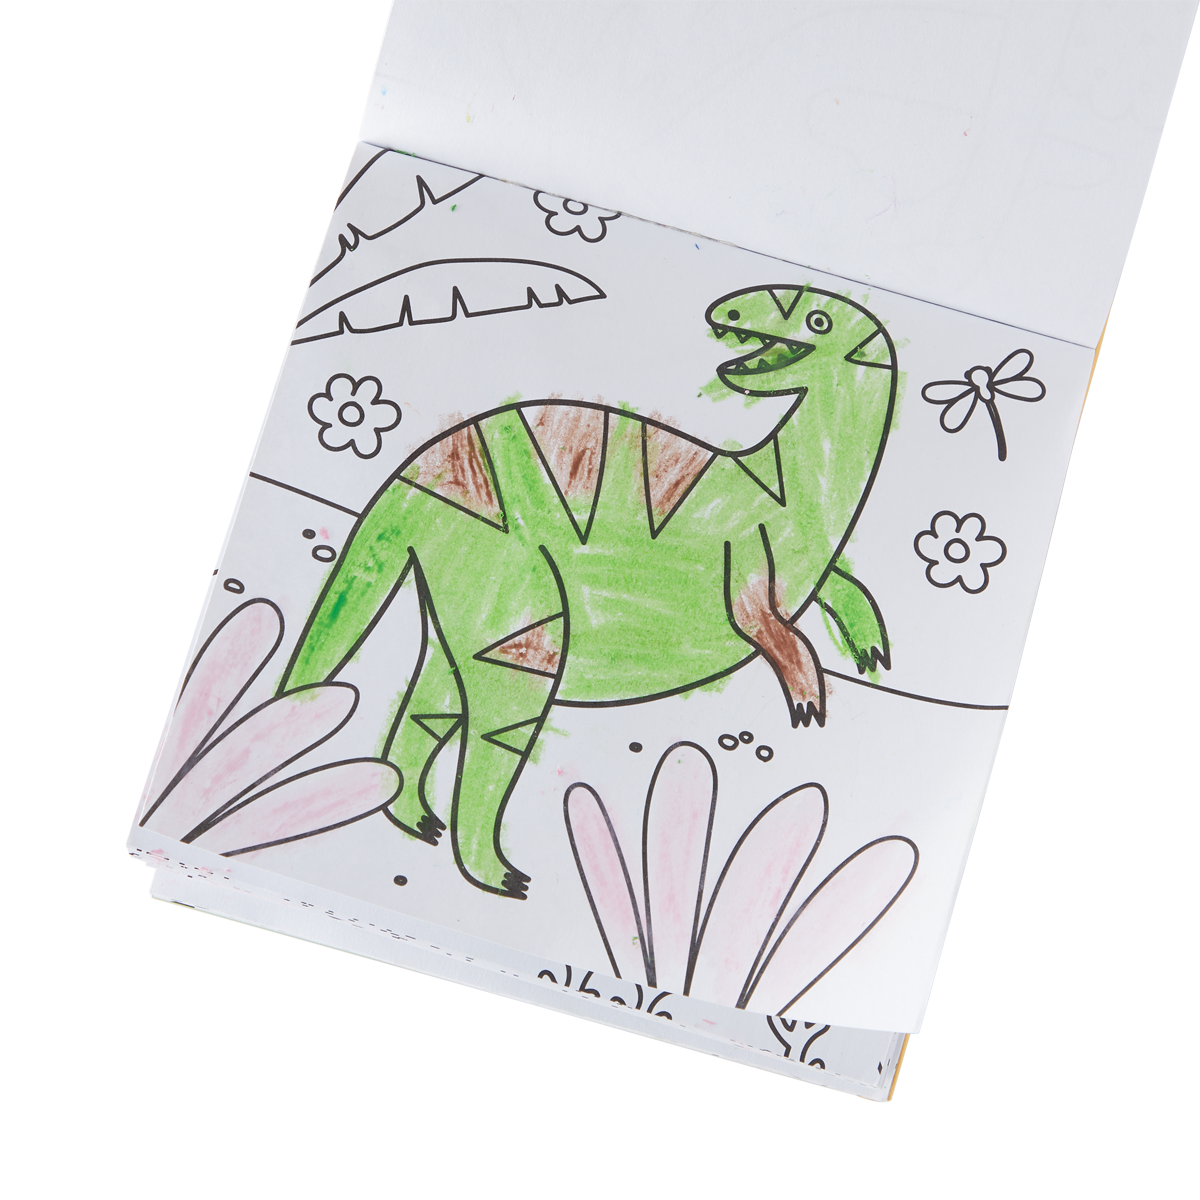 Dinosaur Coloring Book for Kids: Fun ABC Dinosaur Coloring Books